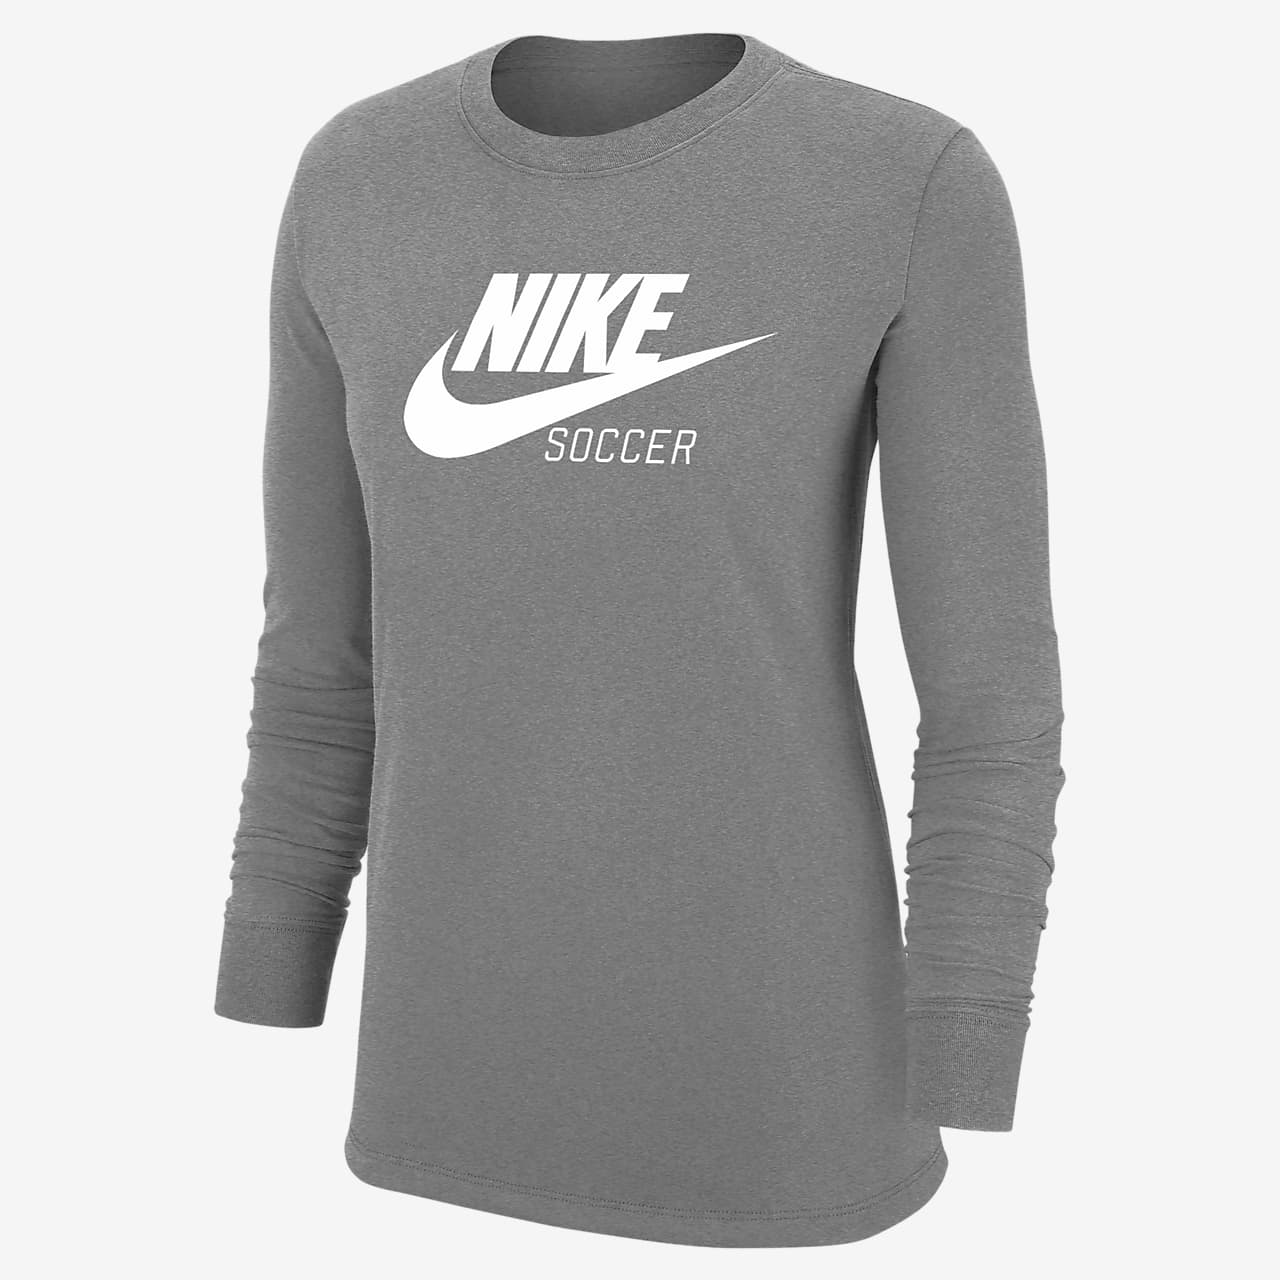 Nike Swoosh Soccer Long-Sleeve Nike.com